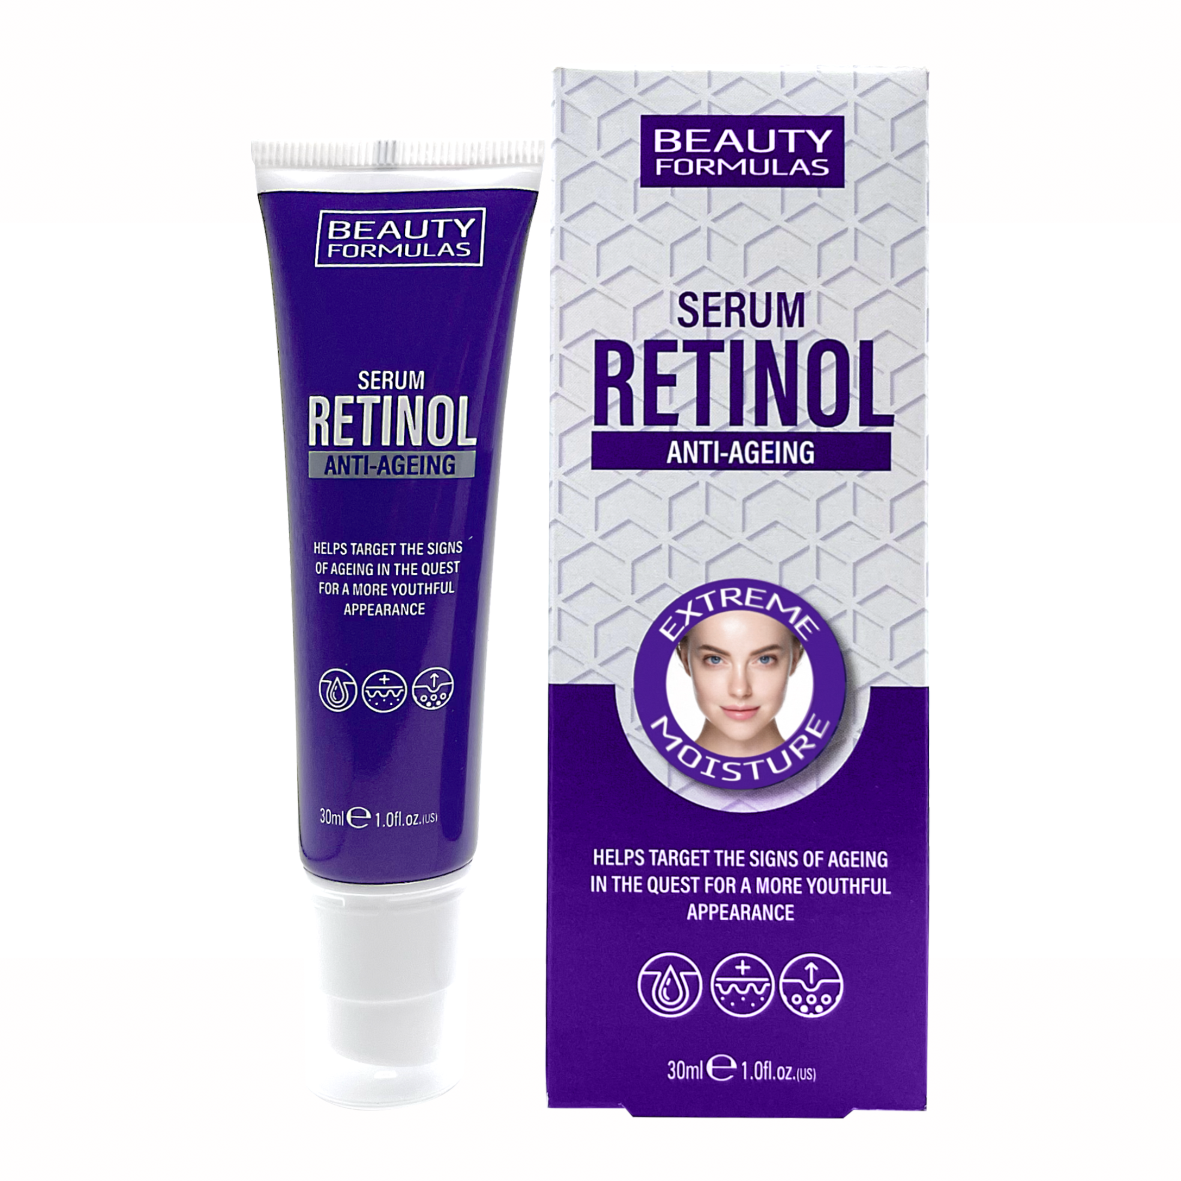 Retinol anti-ageing facial serum.